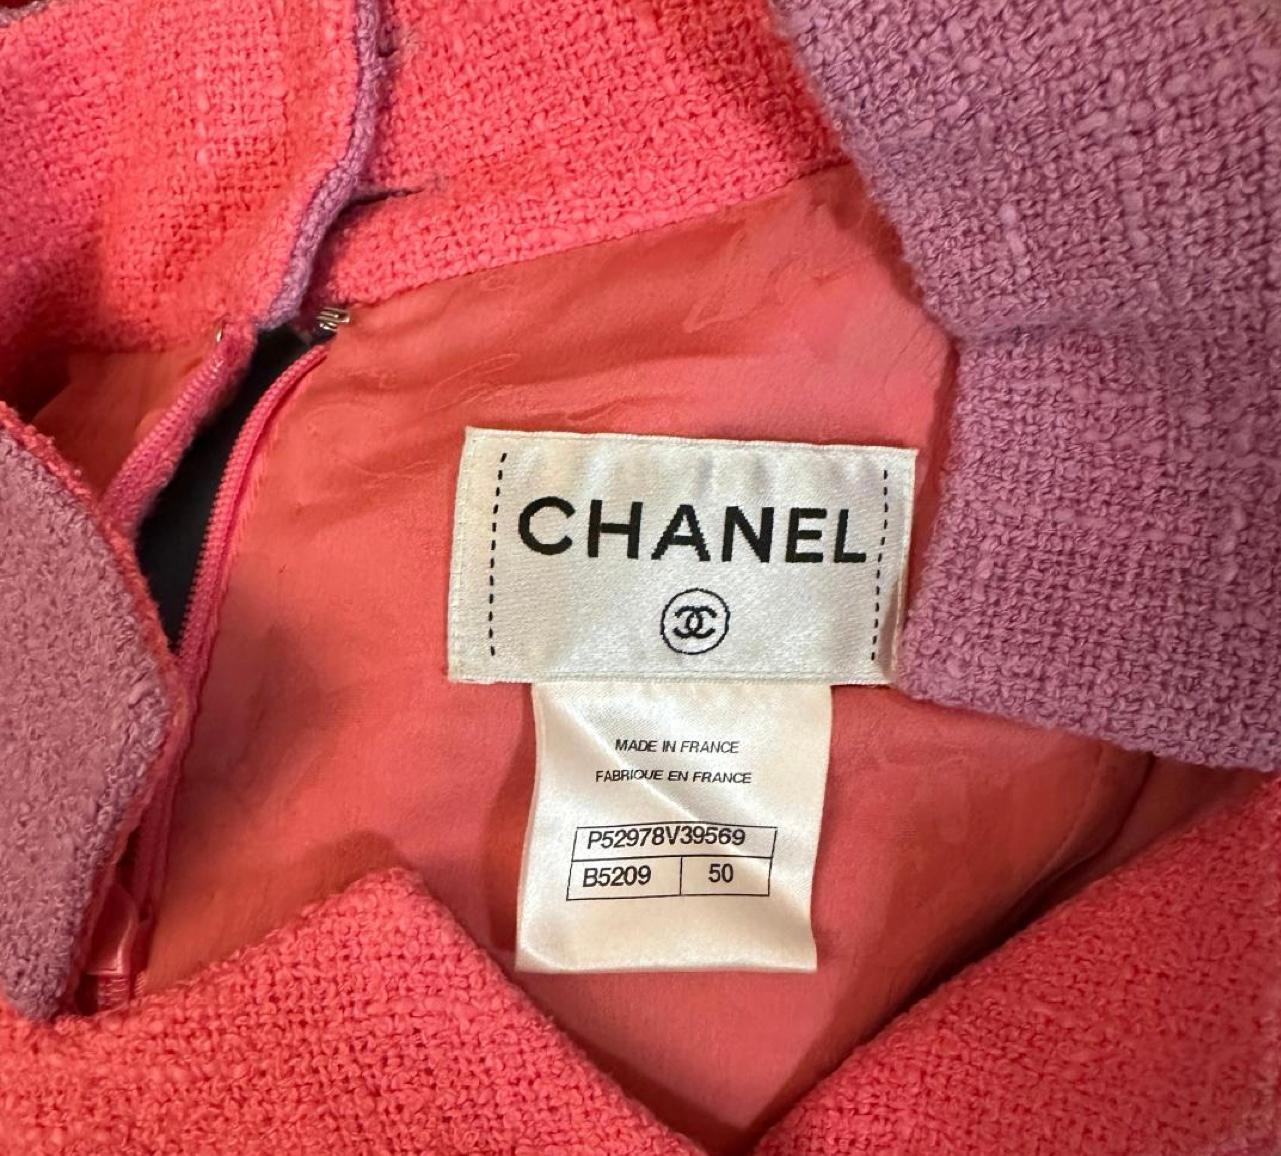 Chanel Paris / Seoul Runway Tweed Dress For Sale 3